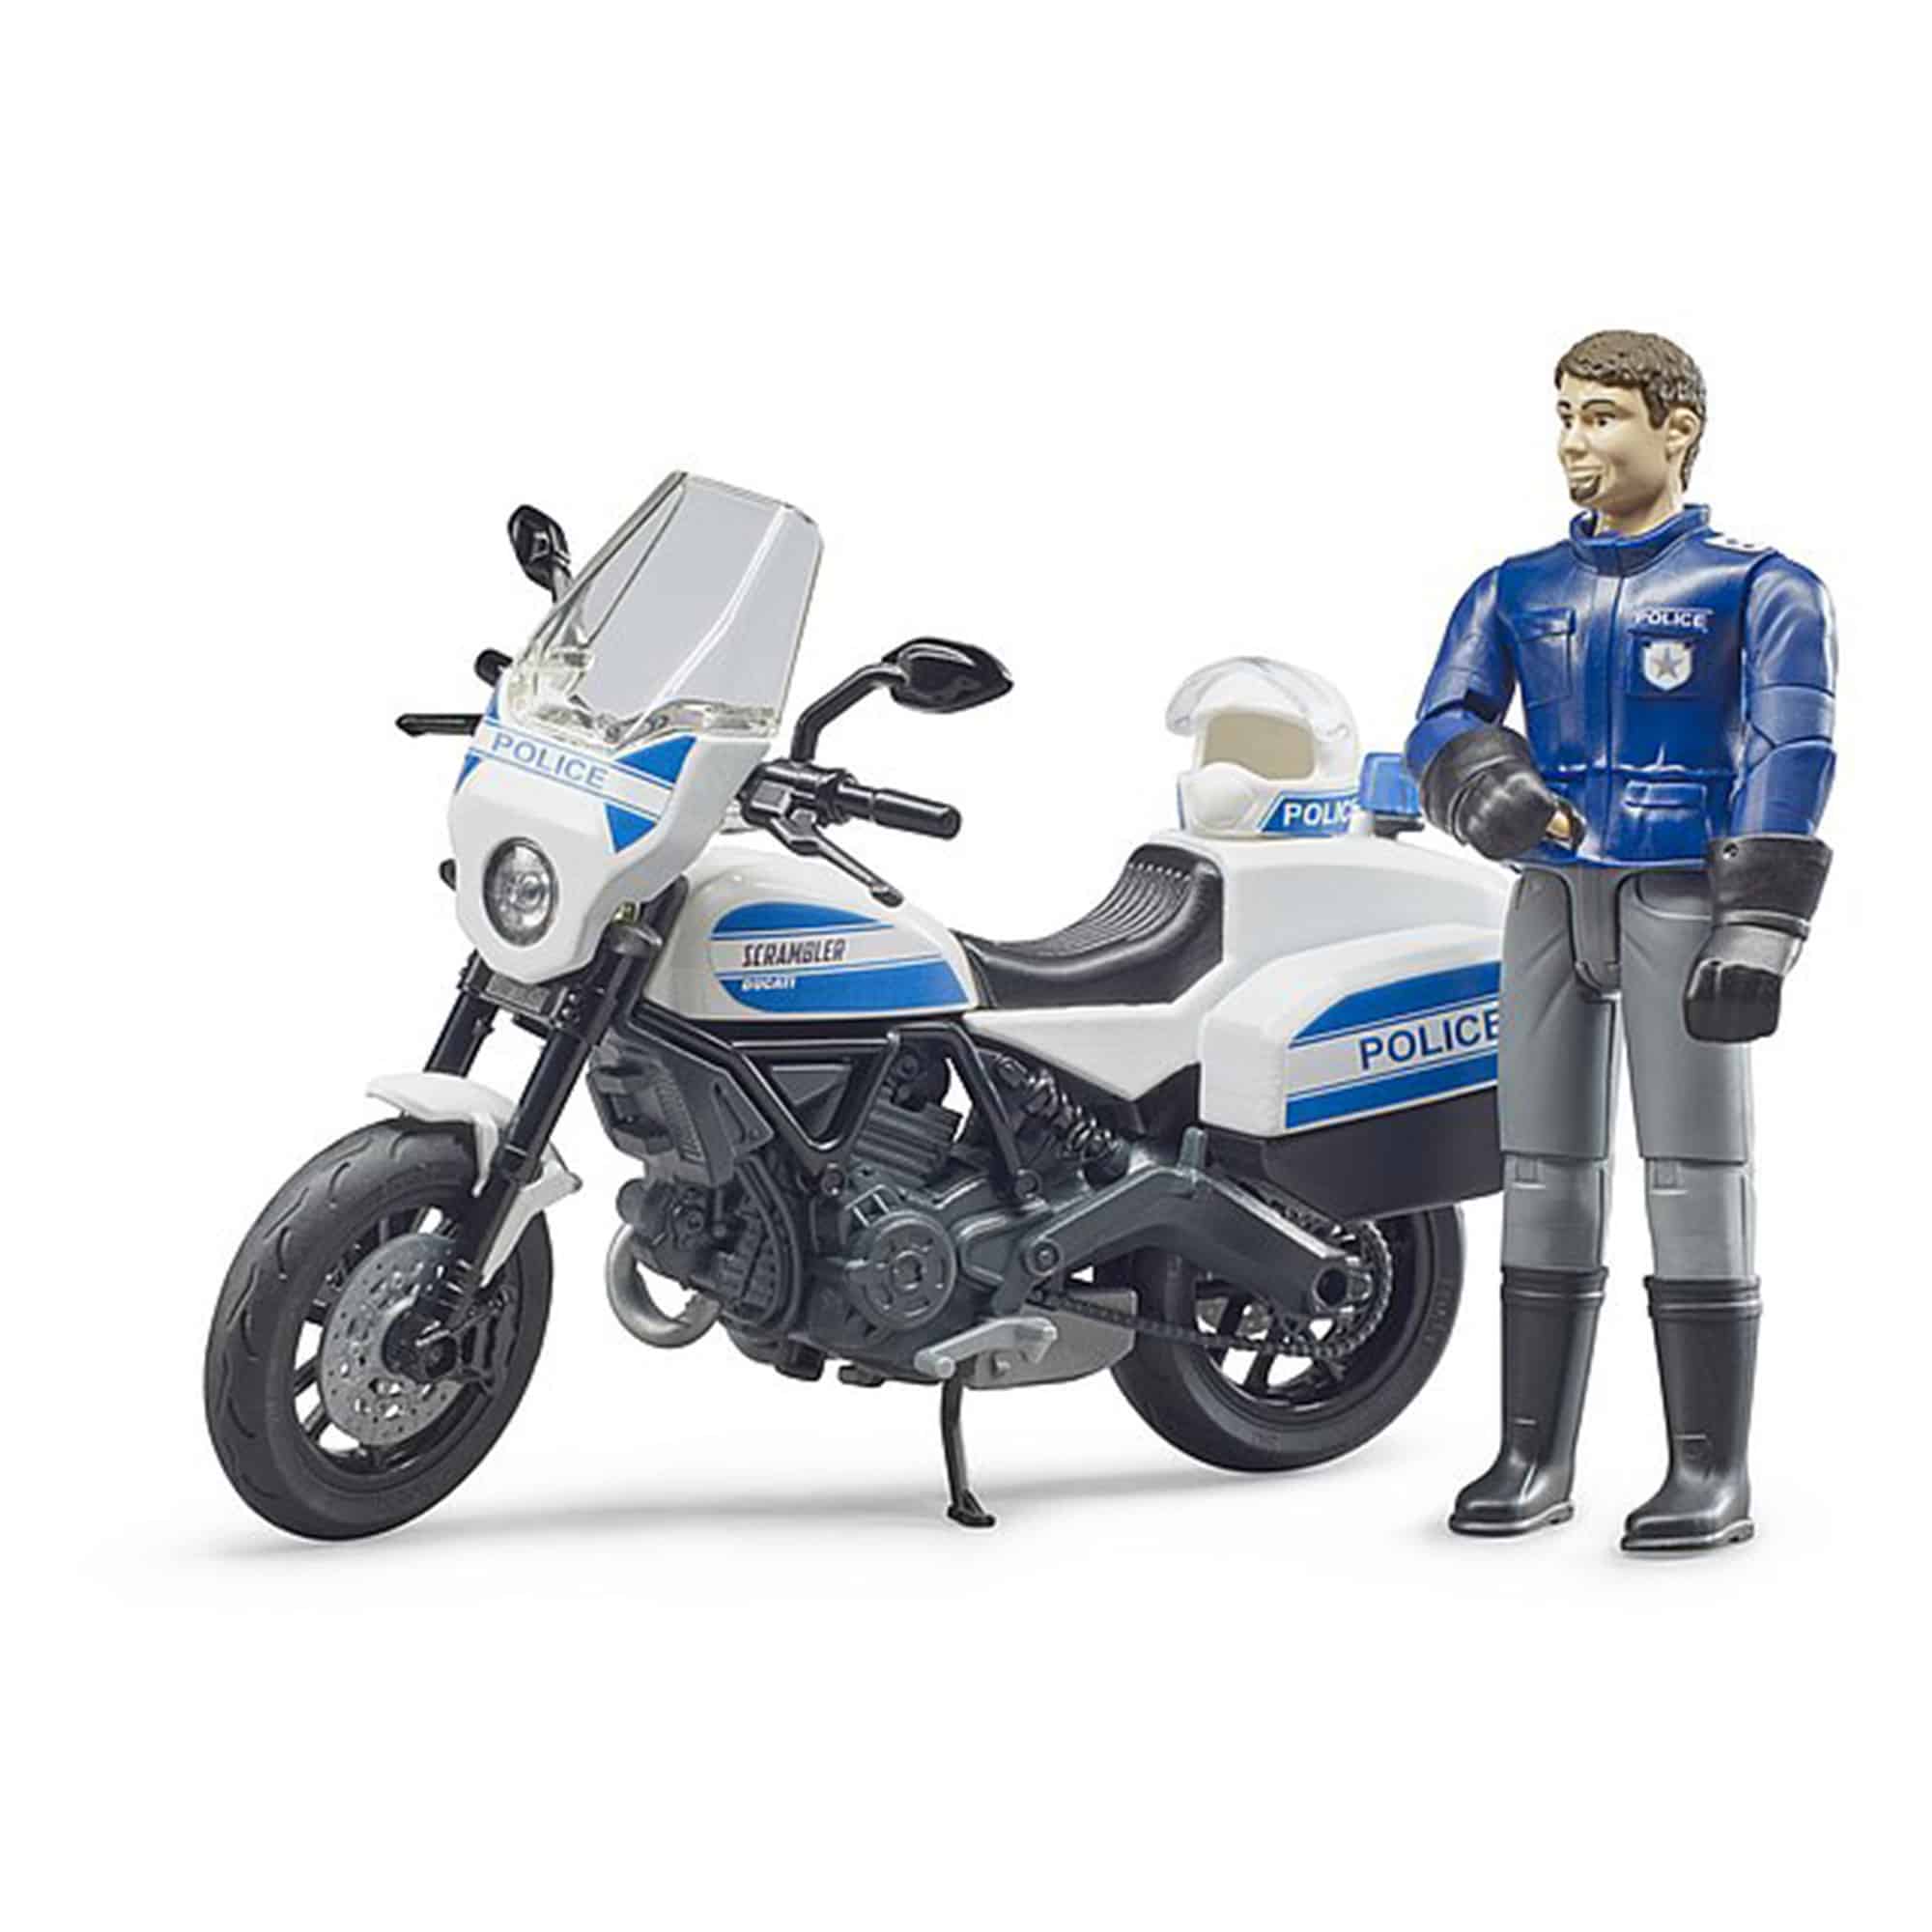 Bruder - bworld Scrambler Ducati police motorcycle